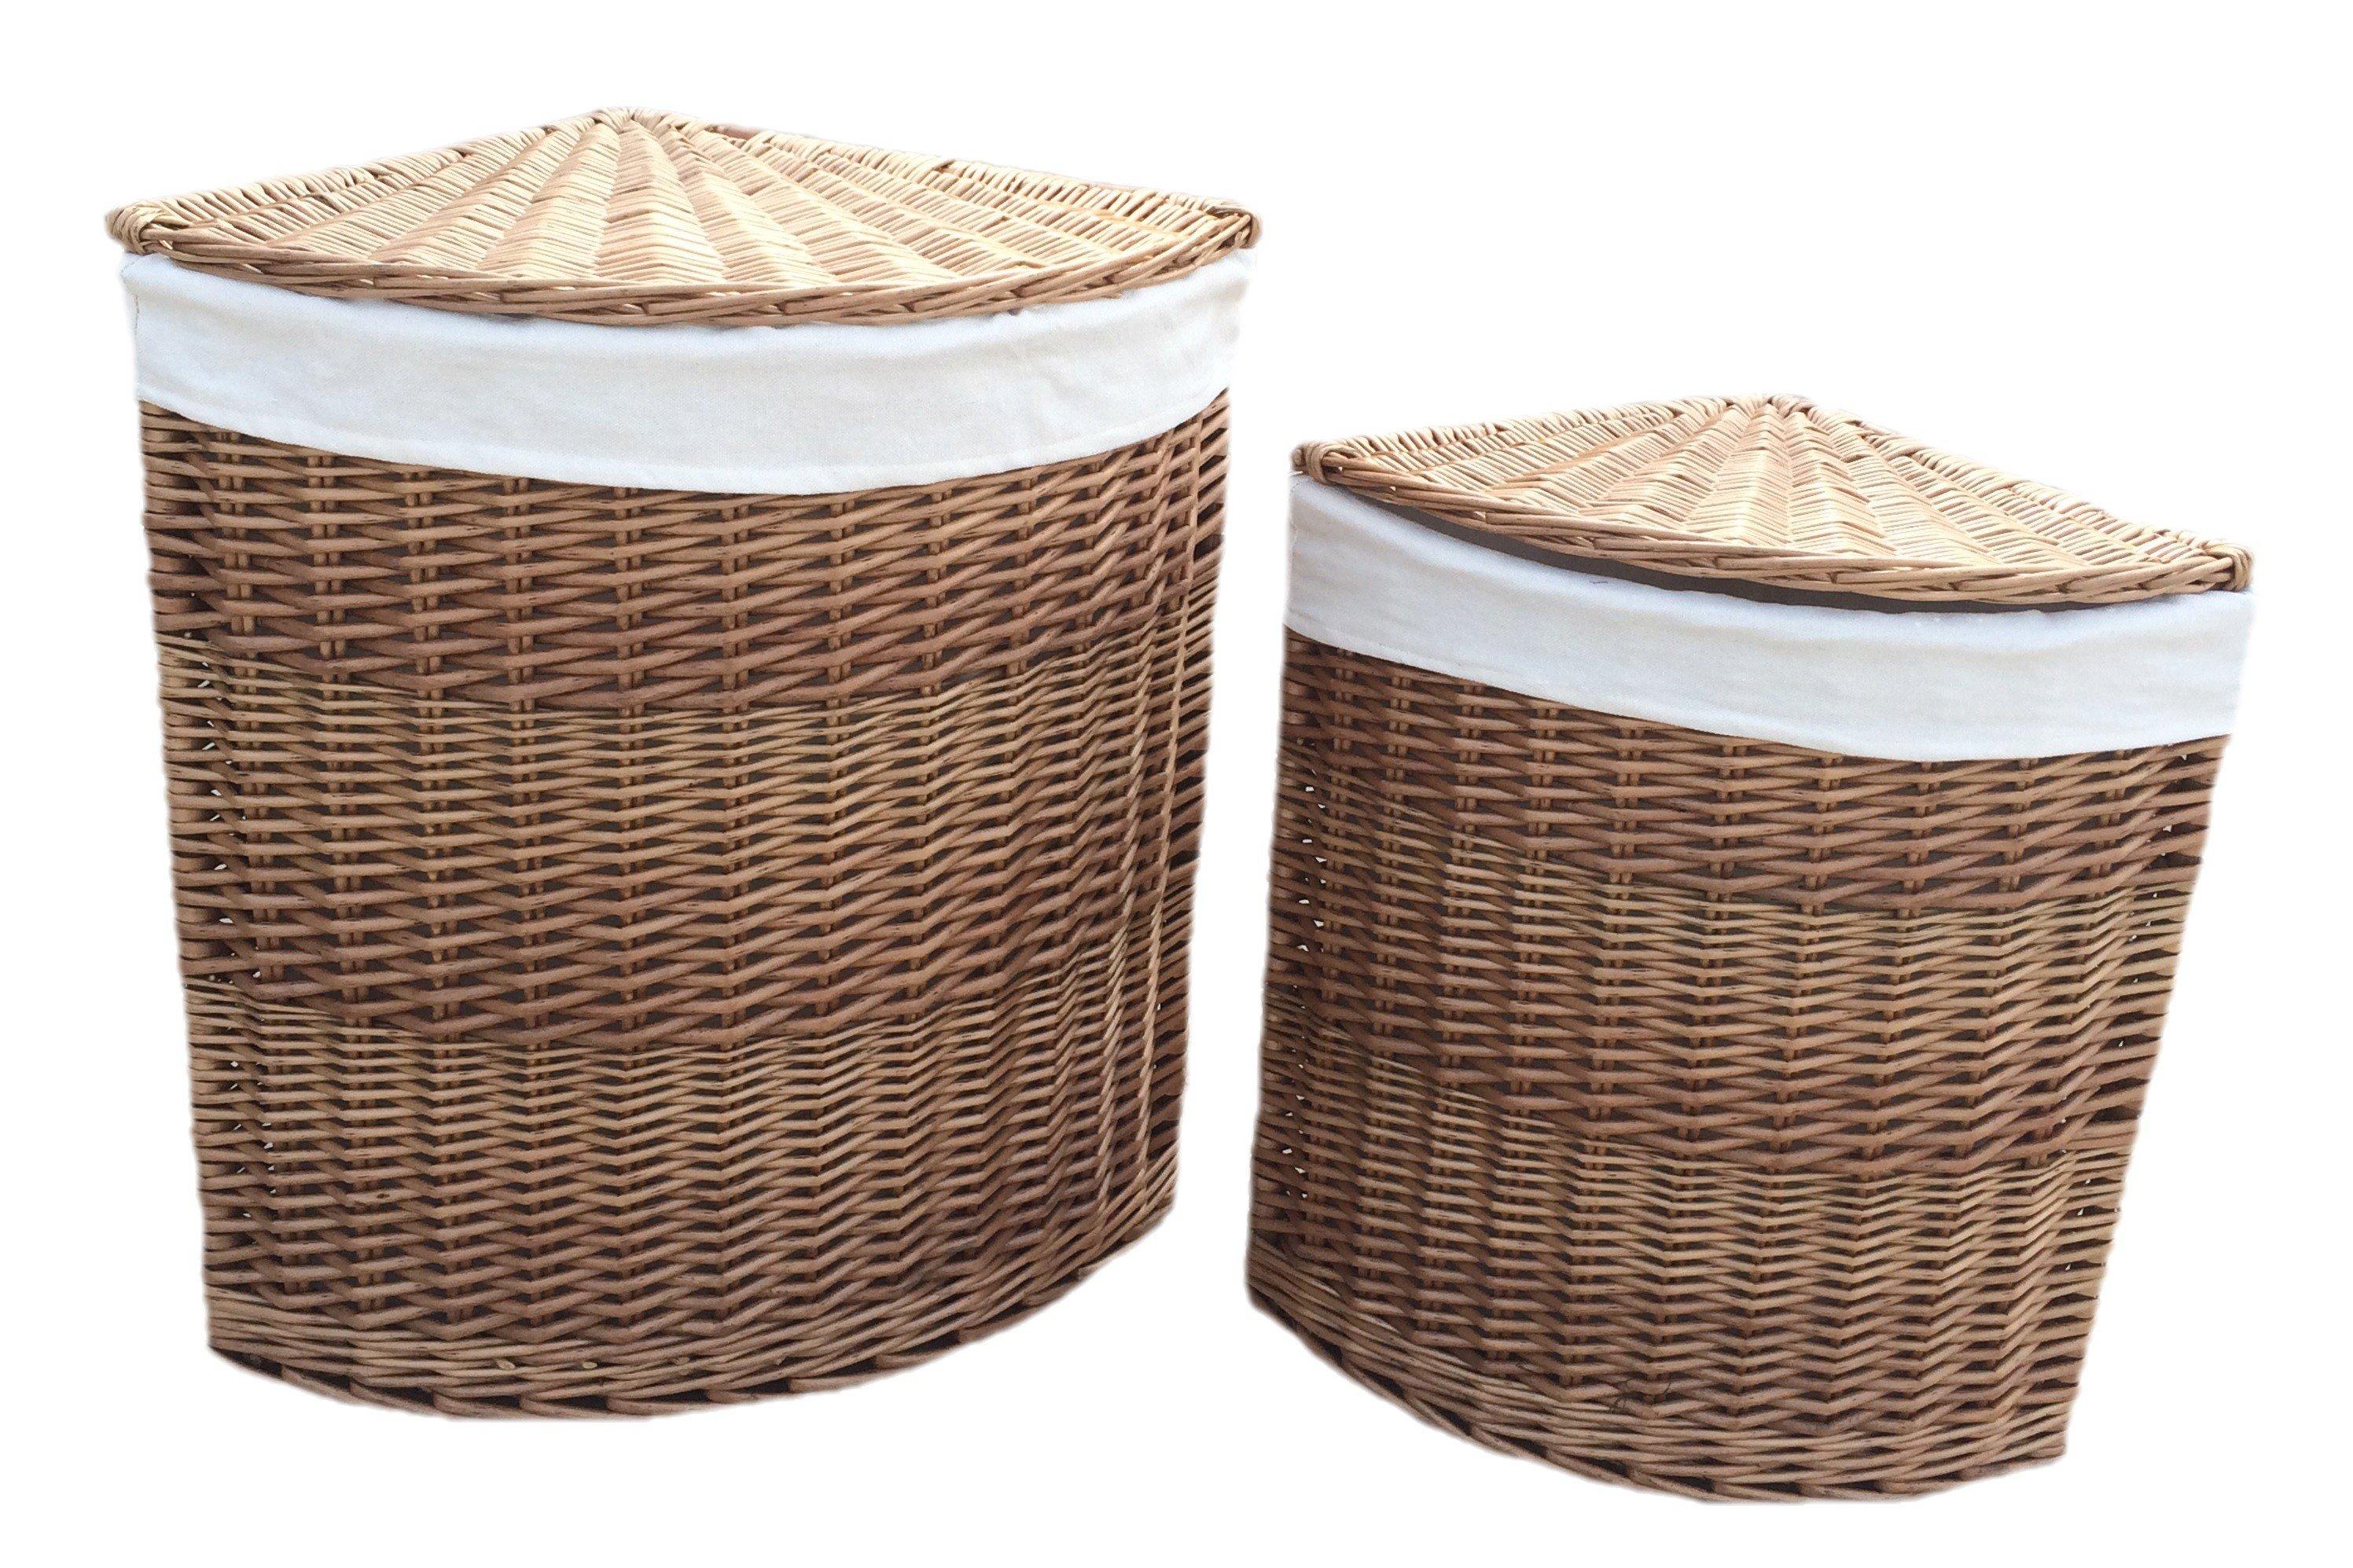 Set of 2 Cotton Lined Light Steamed Corner Laundry Baskets